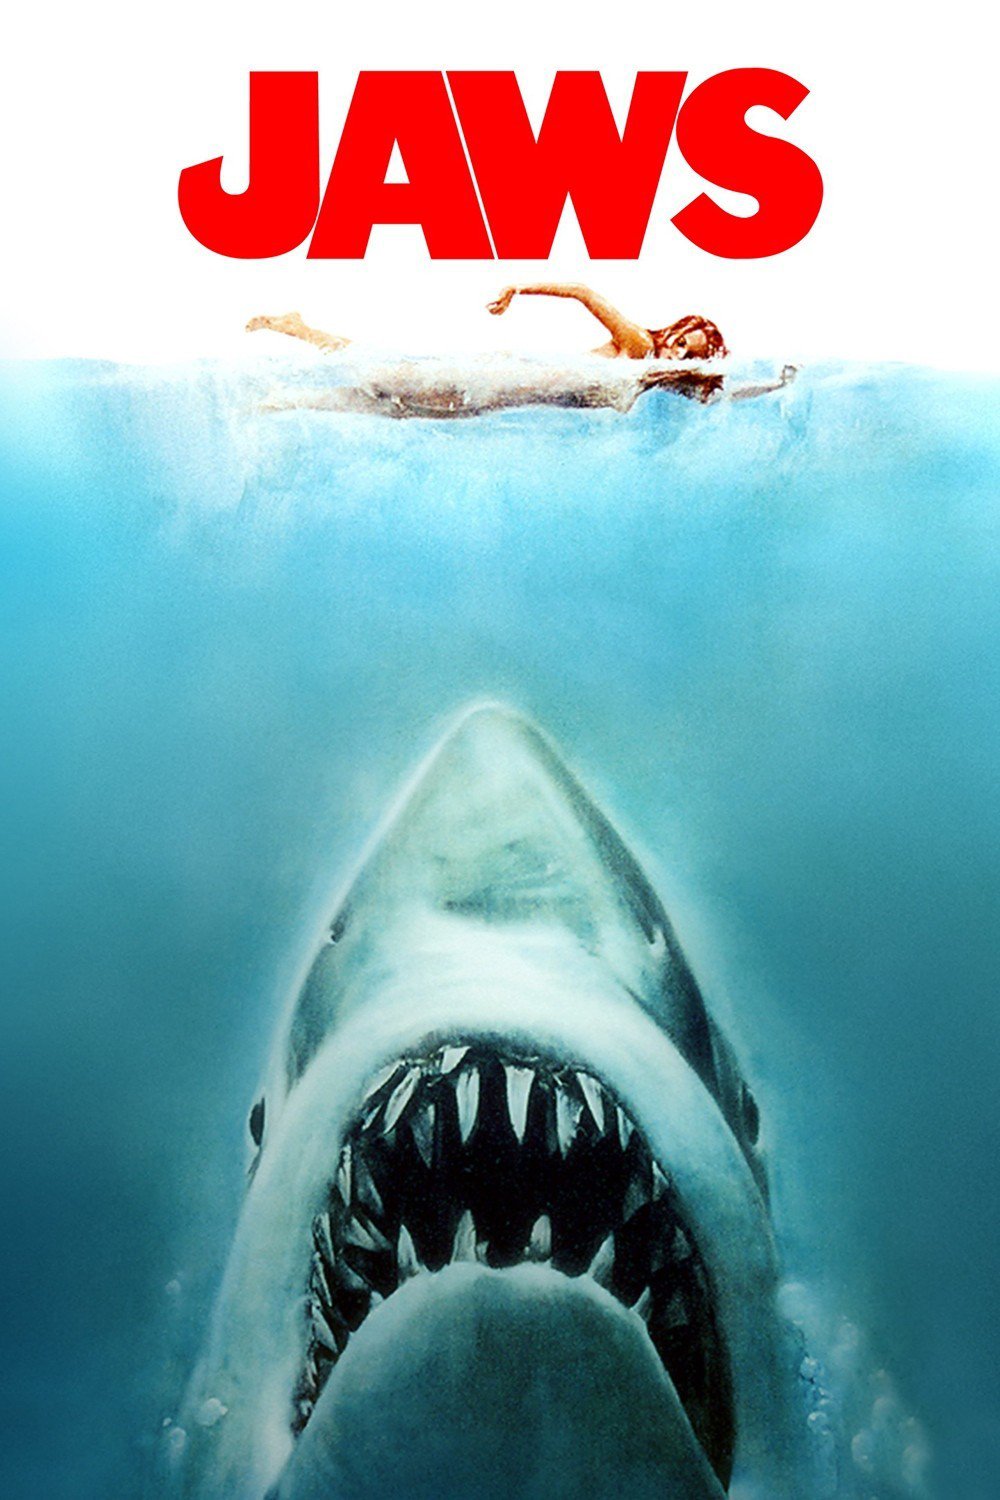 JAWS movie poster bite mark